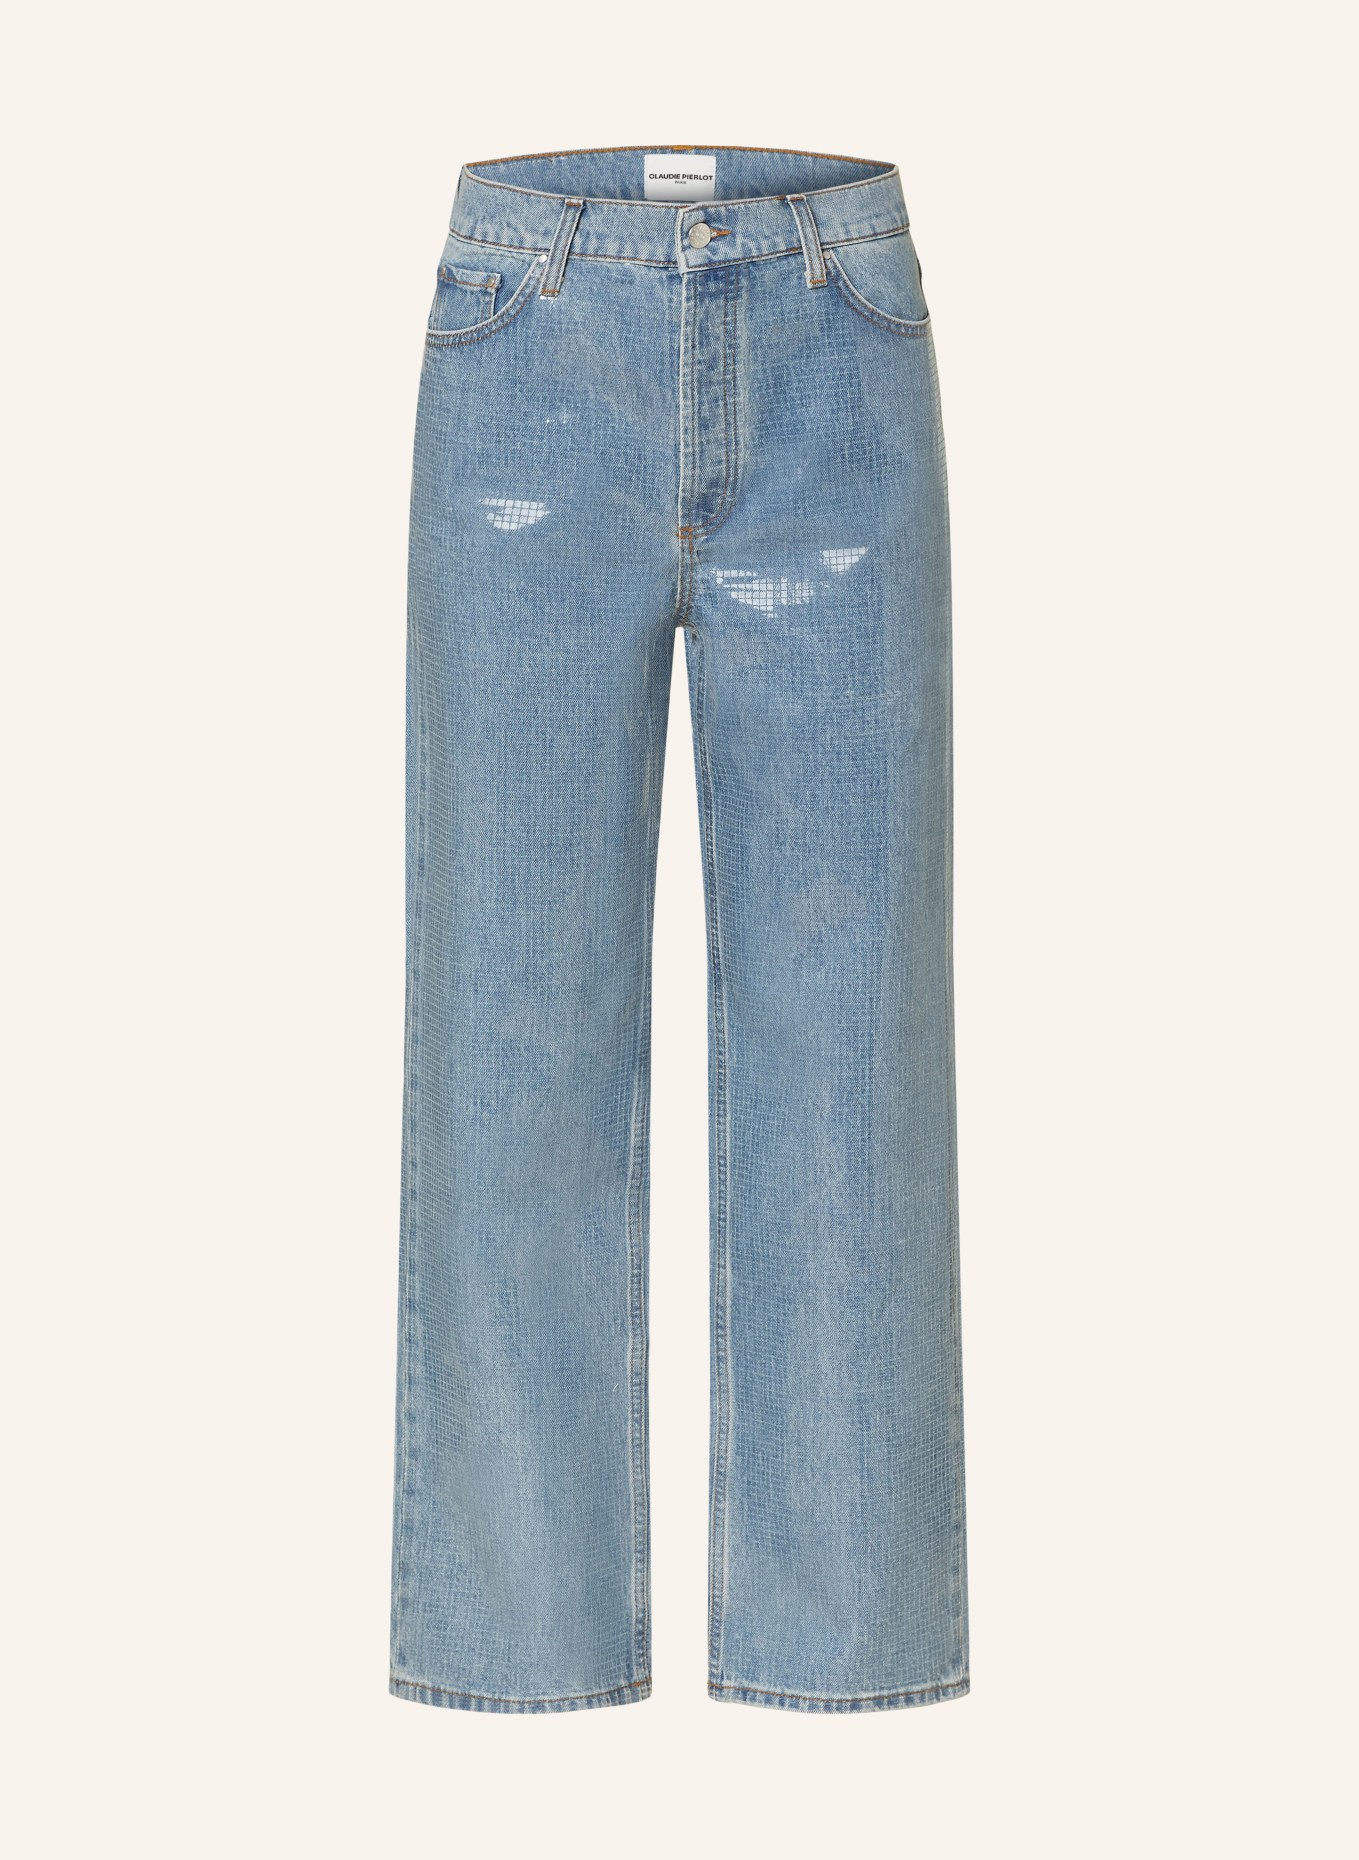 CLAUDIE PIERLOT Jeans, Farbe: D031 DENIM MID BLUE (Bild 1)